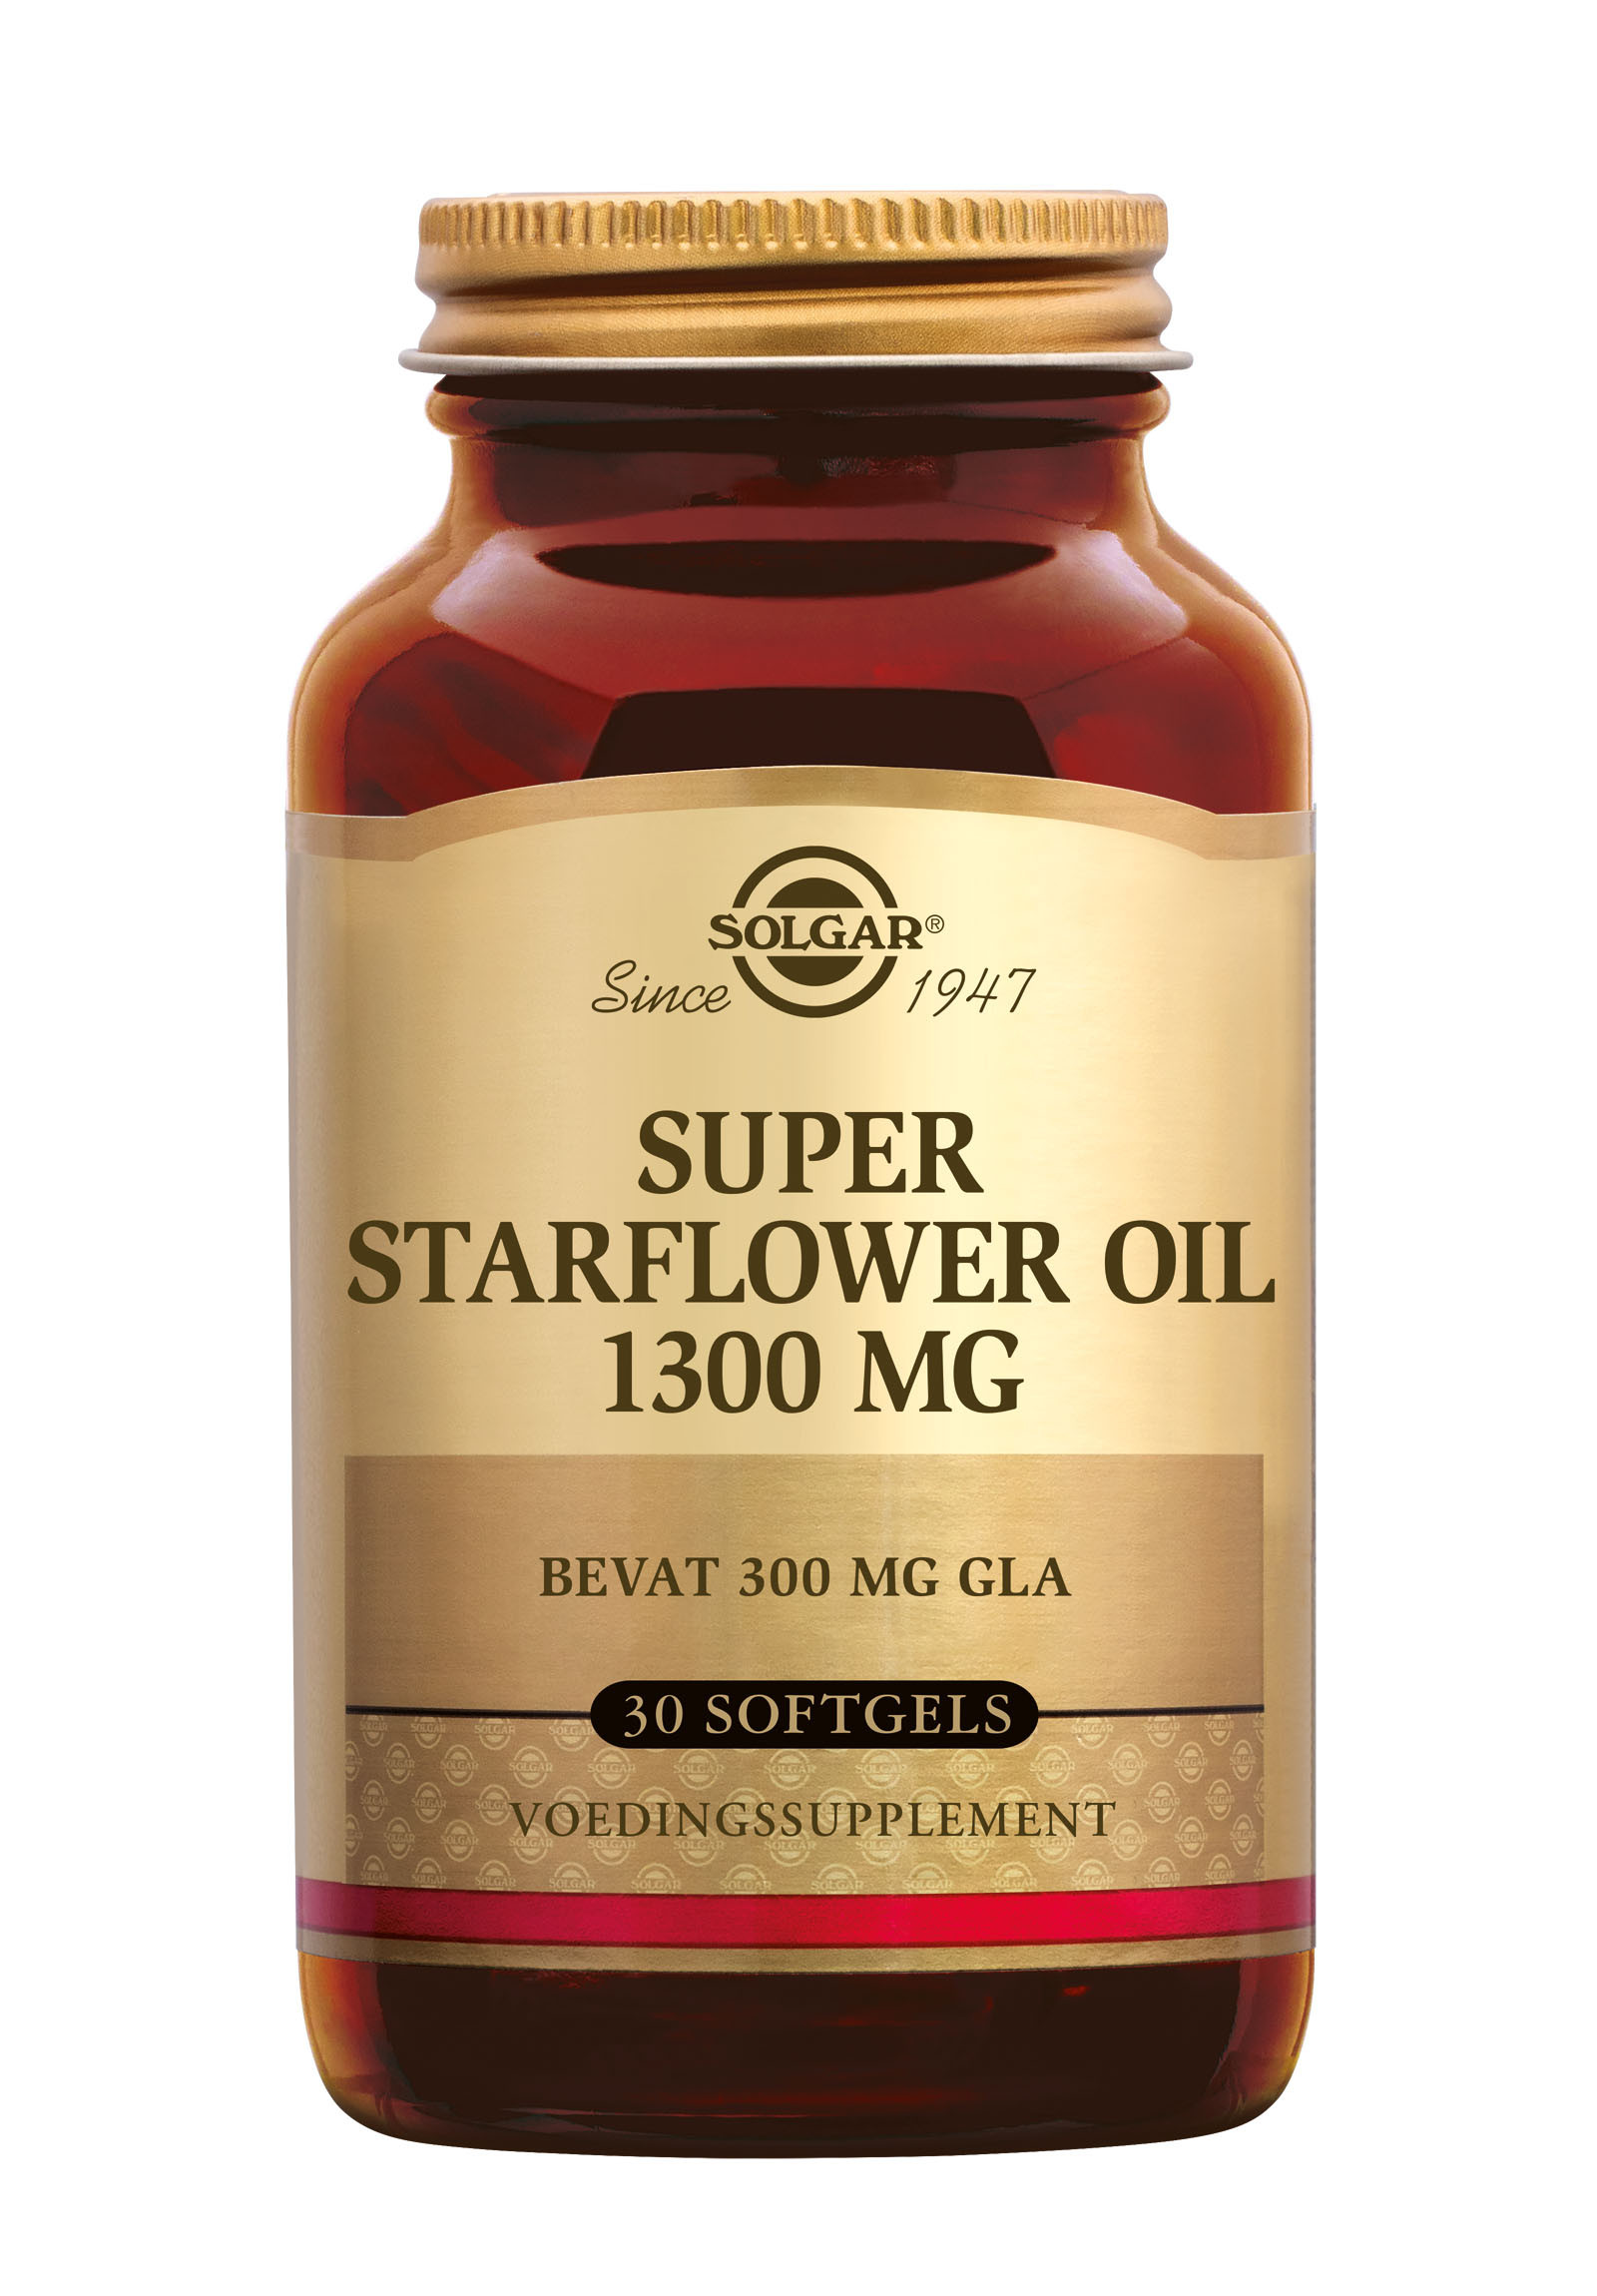 Solgar Super Starflower Oil 1300 mg (300 mg GLA)